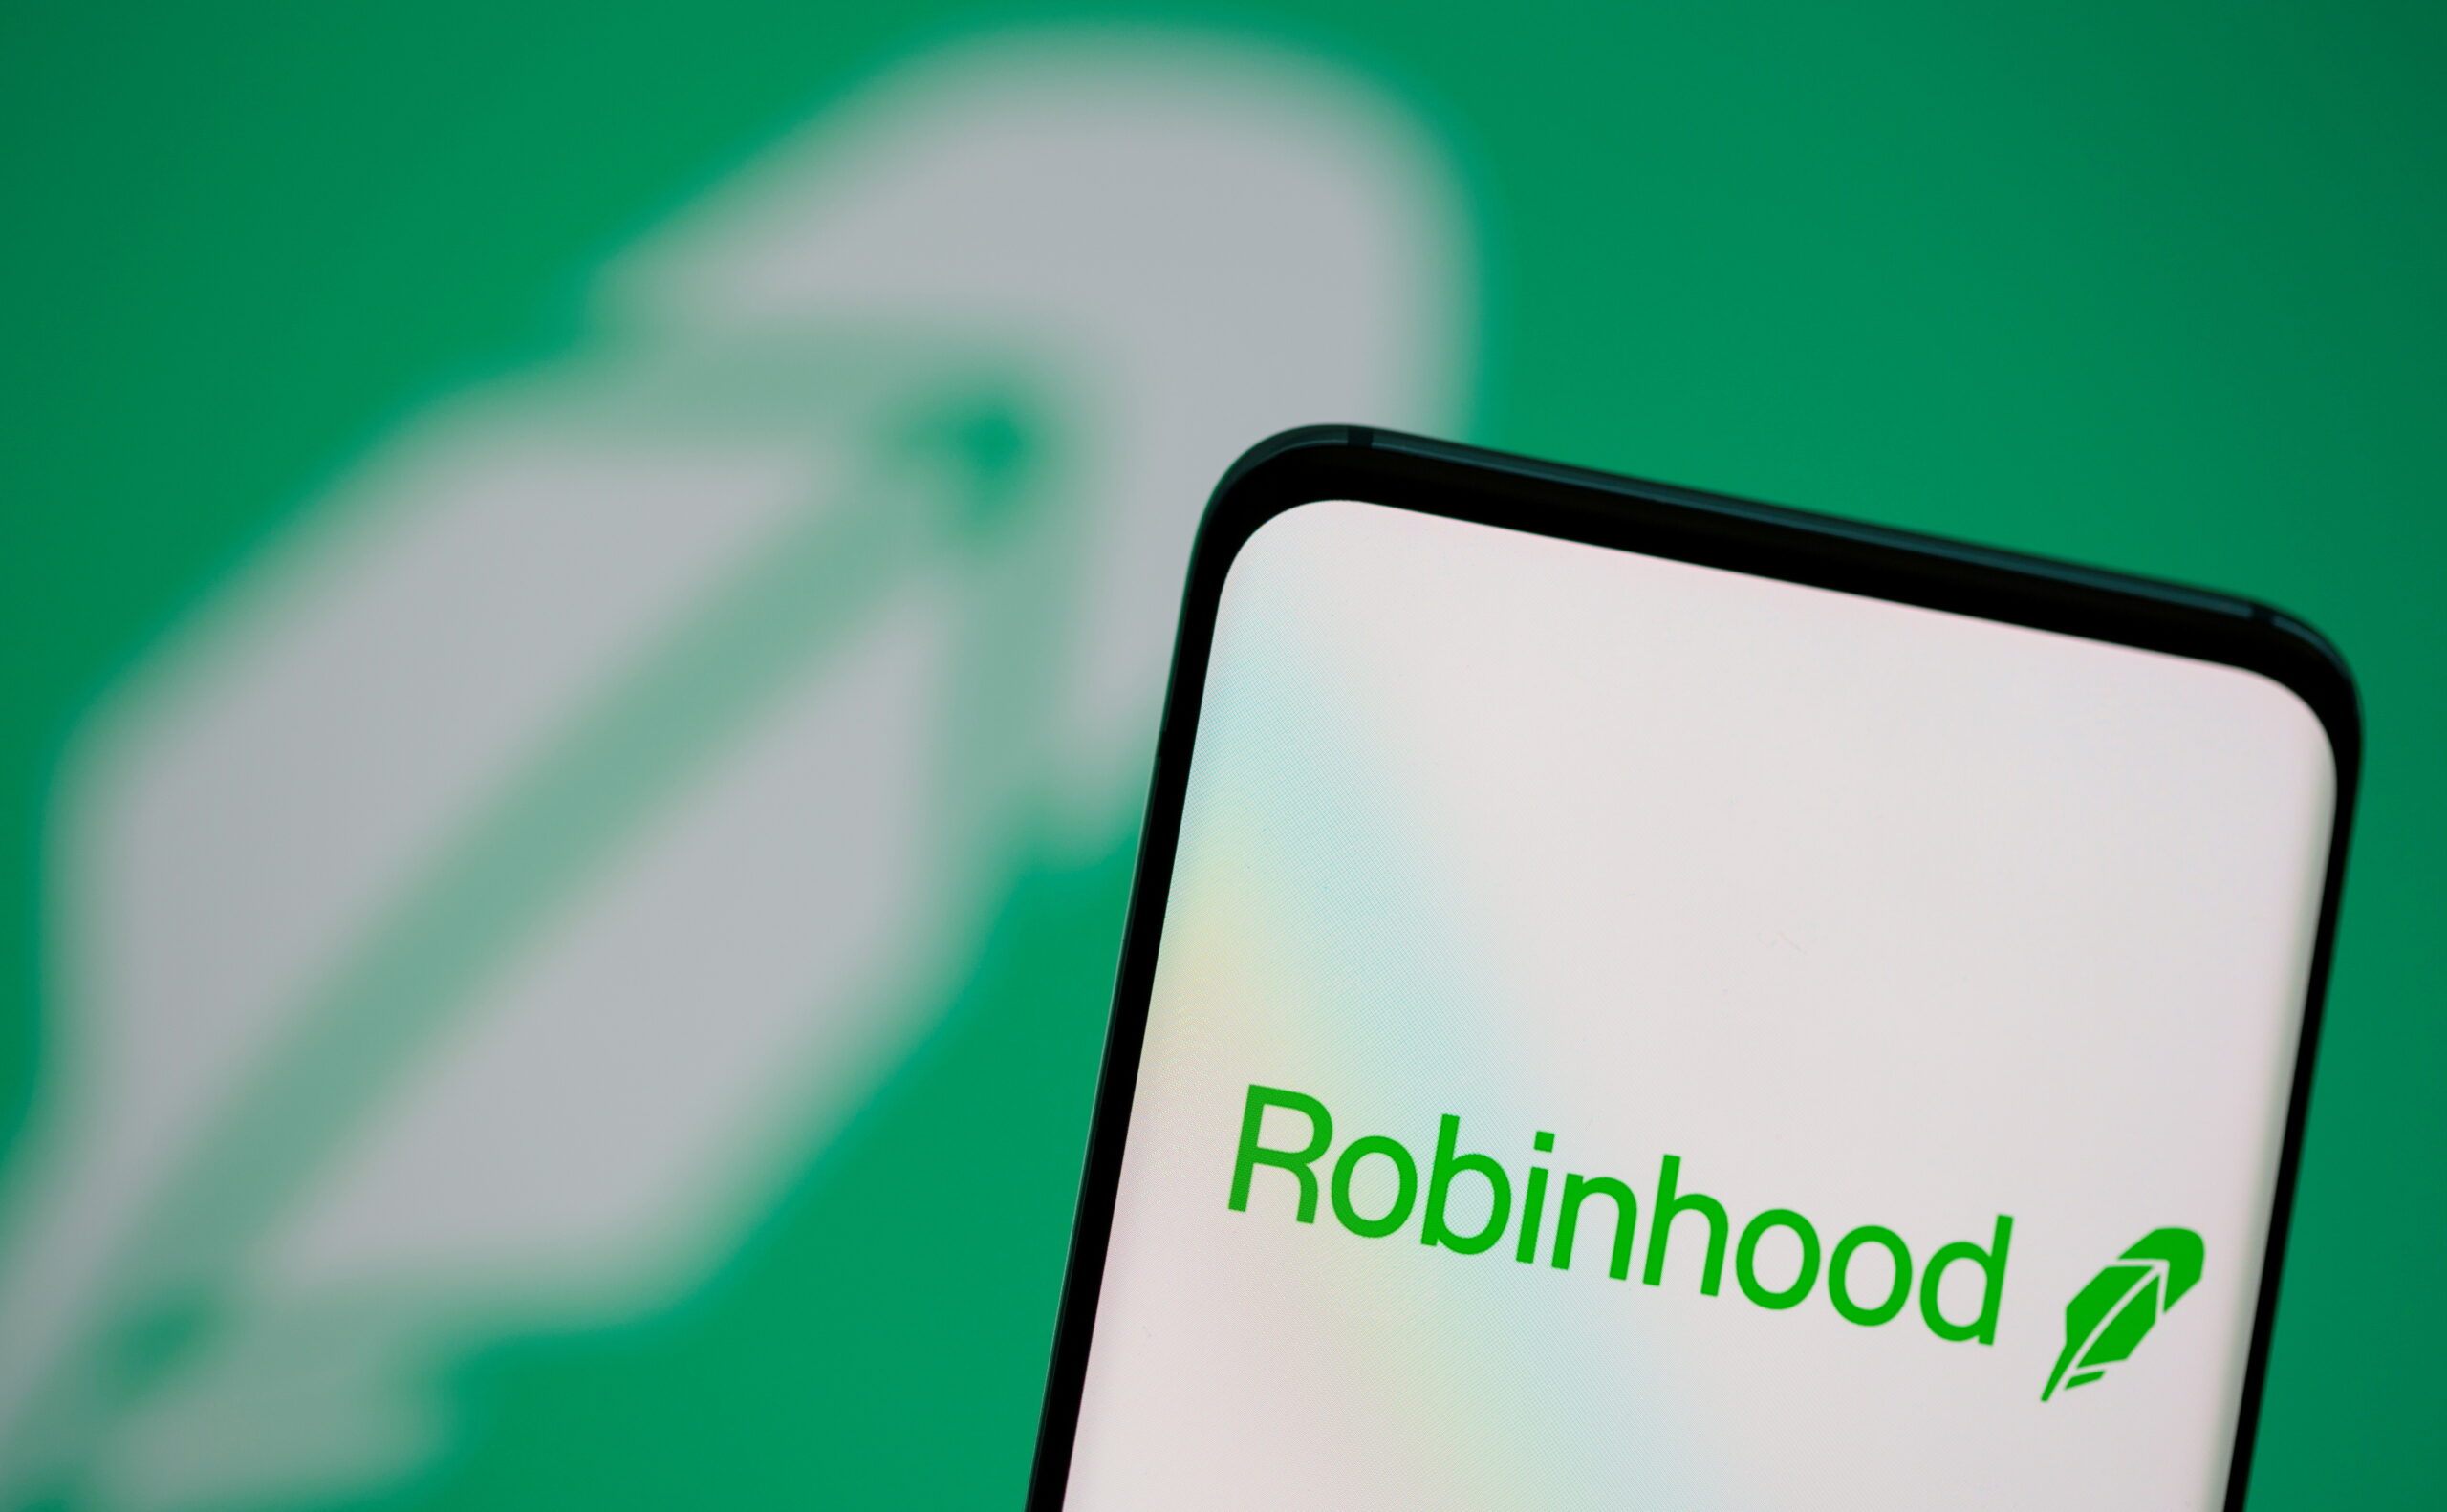  Robinhood says U.S. watchdogs probing staff meme stock trading, registration